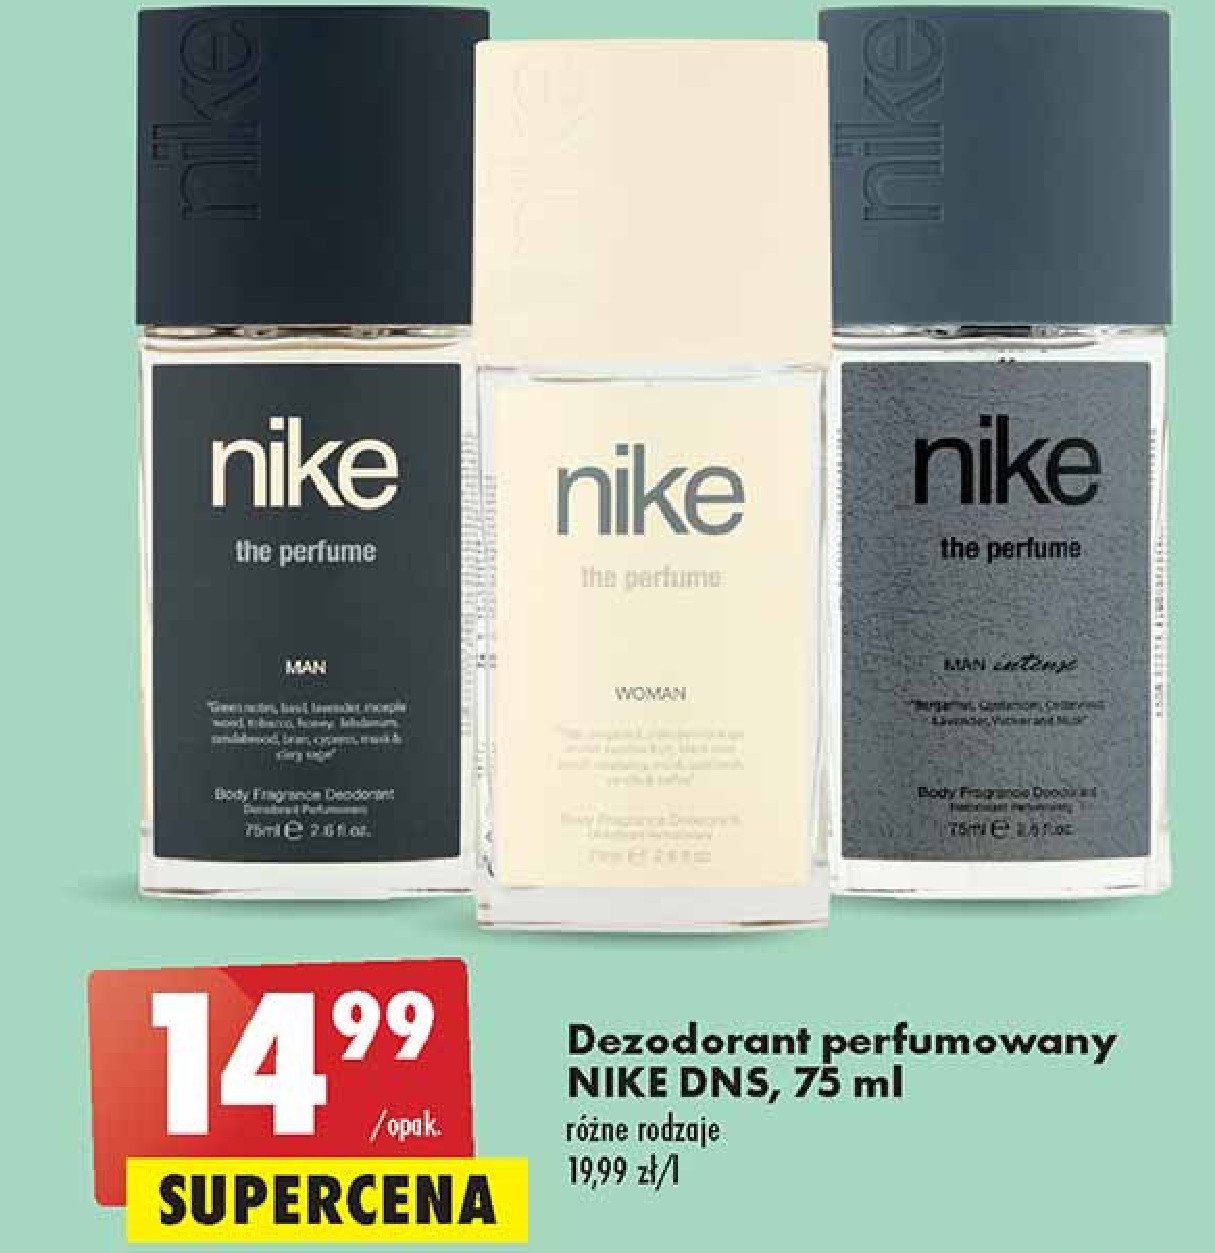 Dezodorant Nike man Nike cosmetics promocje